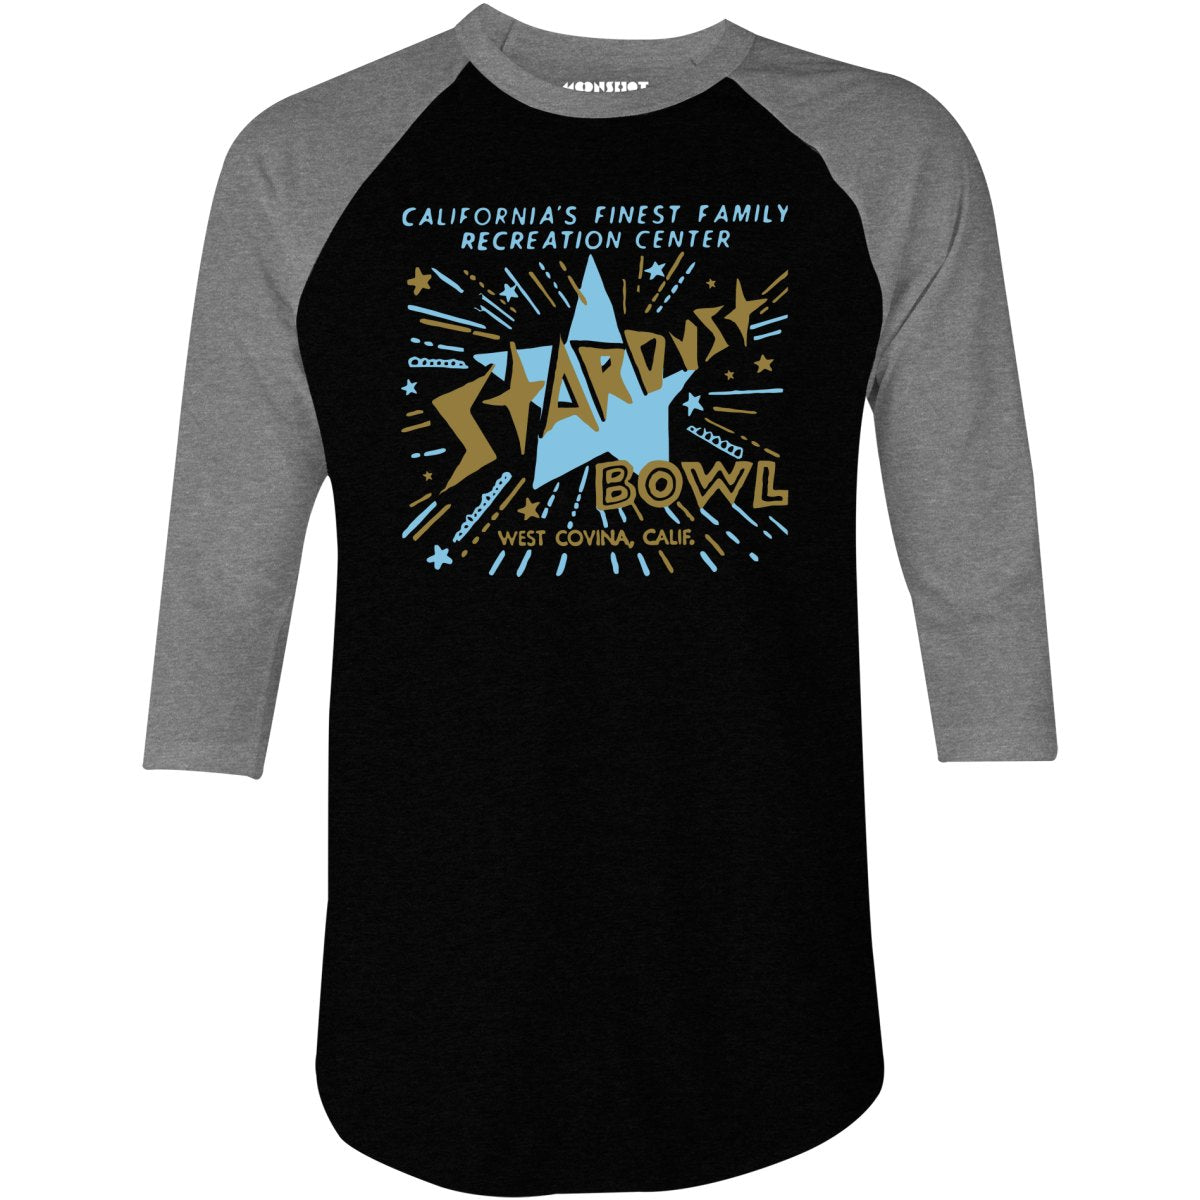 Stardust Bowl - West Covina, CA - Vintage Bowling Alley - 3/4 Sleeve Raglan T-Shirt